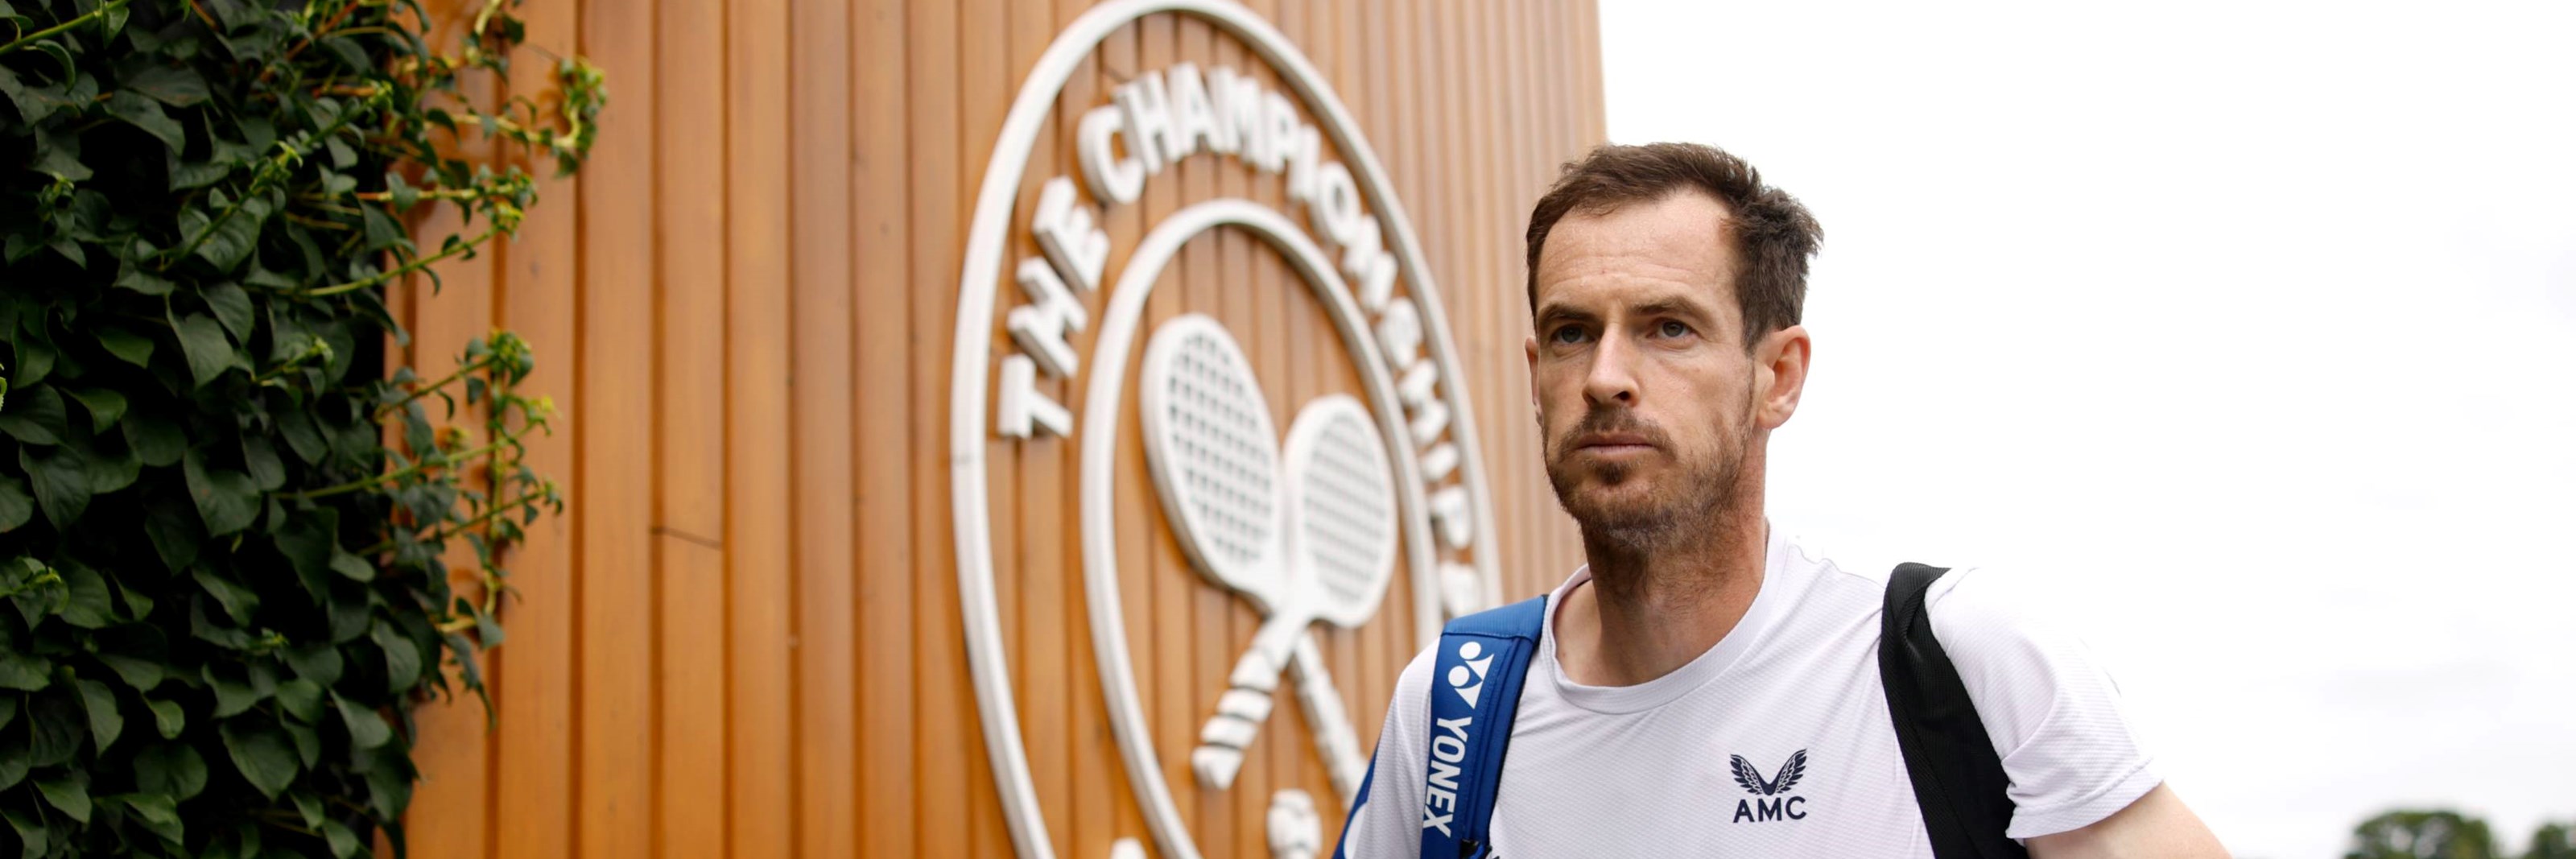 Andy Murray arrives at Wimbledon training